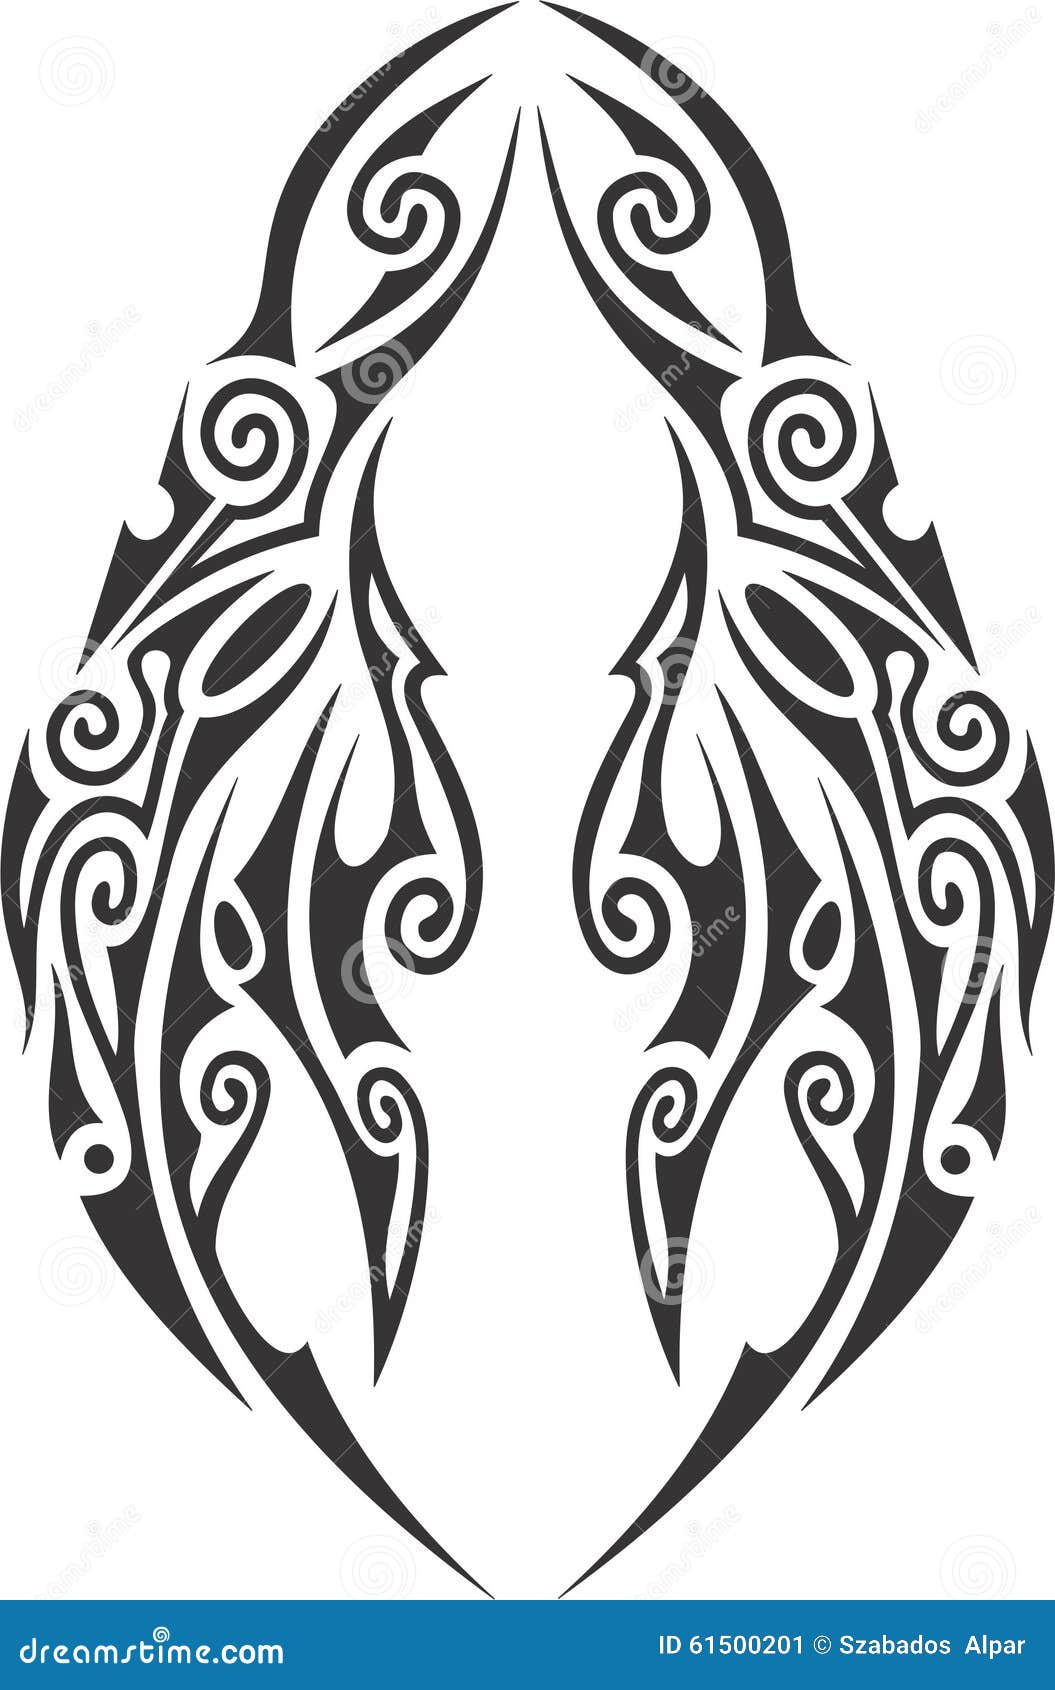 Illustrated Tribal Mask Tattoo Stock Illustration - Illustration of ...